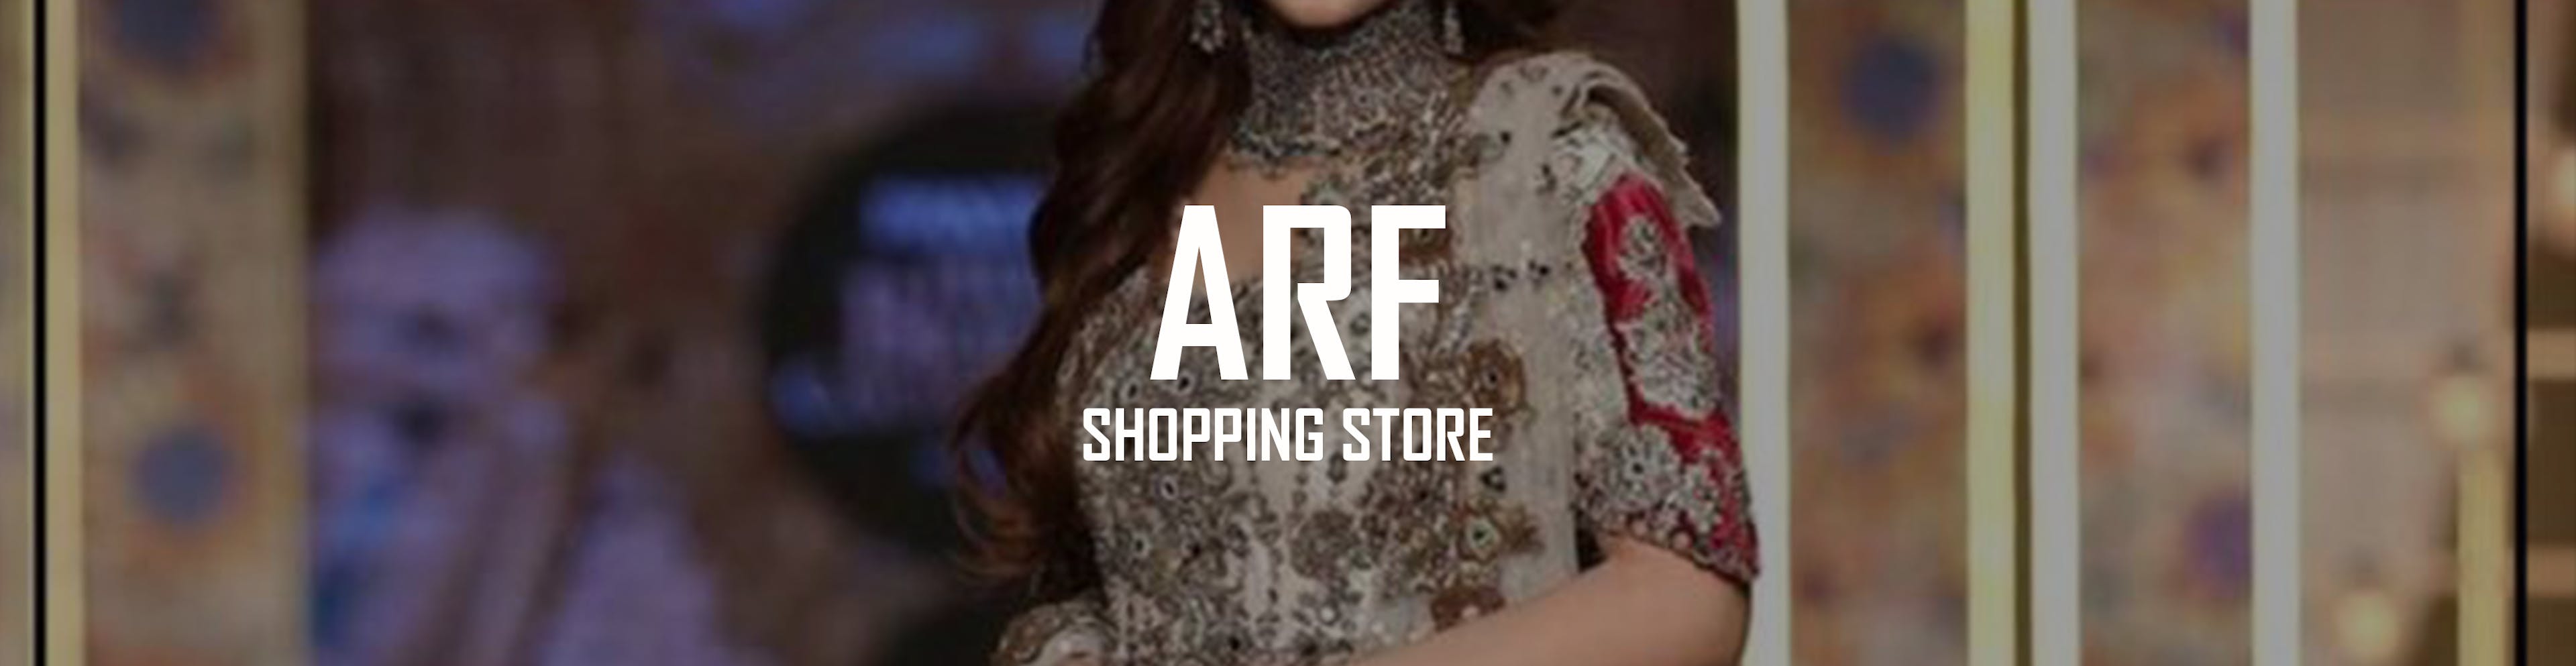 ARF Shopping Store